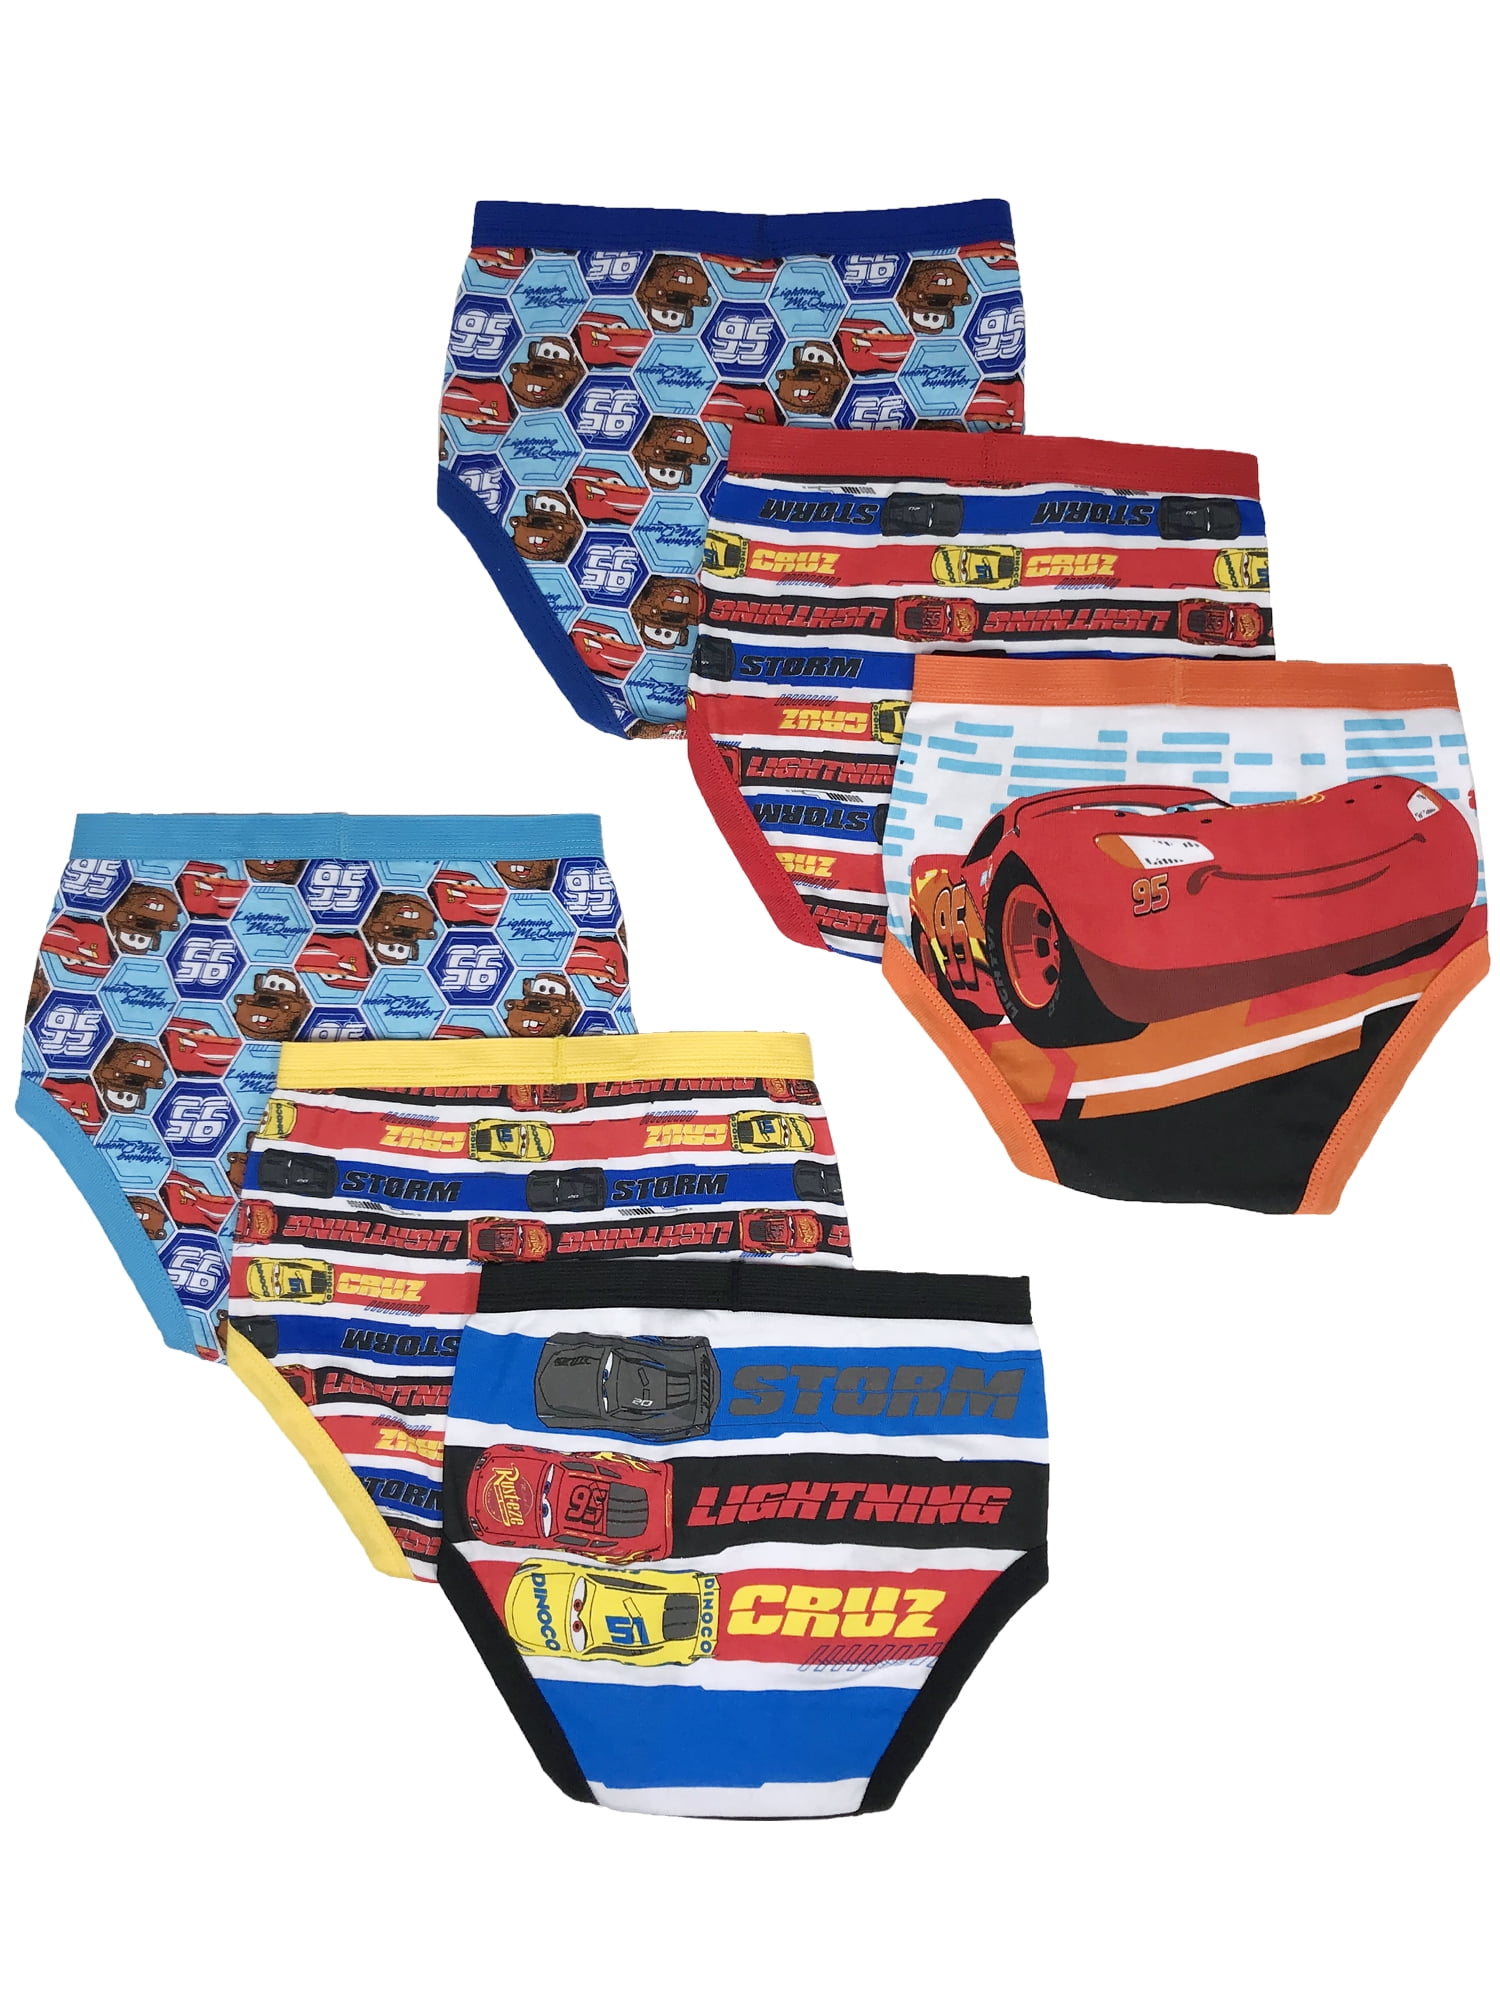 Disney Pixar Cars Cars Boys Underwear, 5+1 Bonus Pack